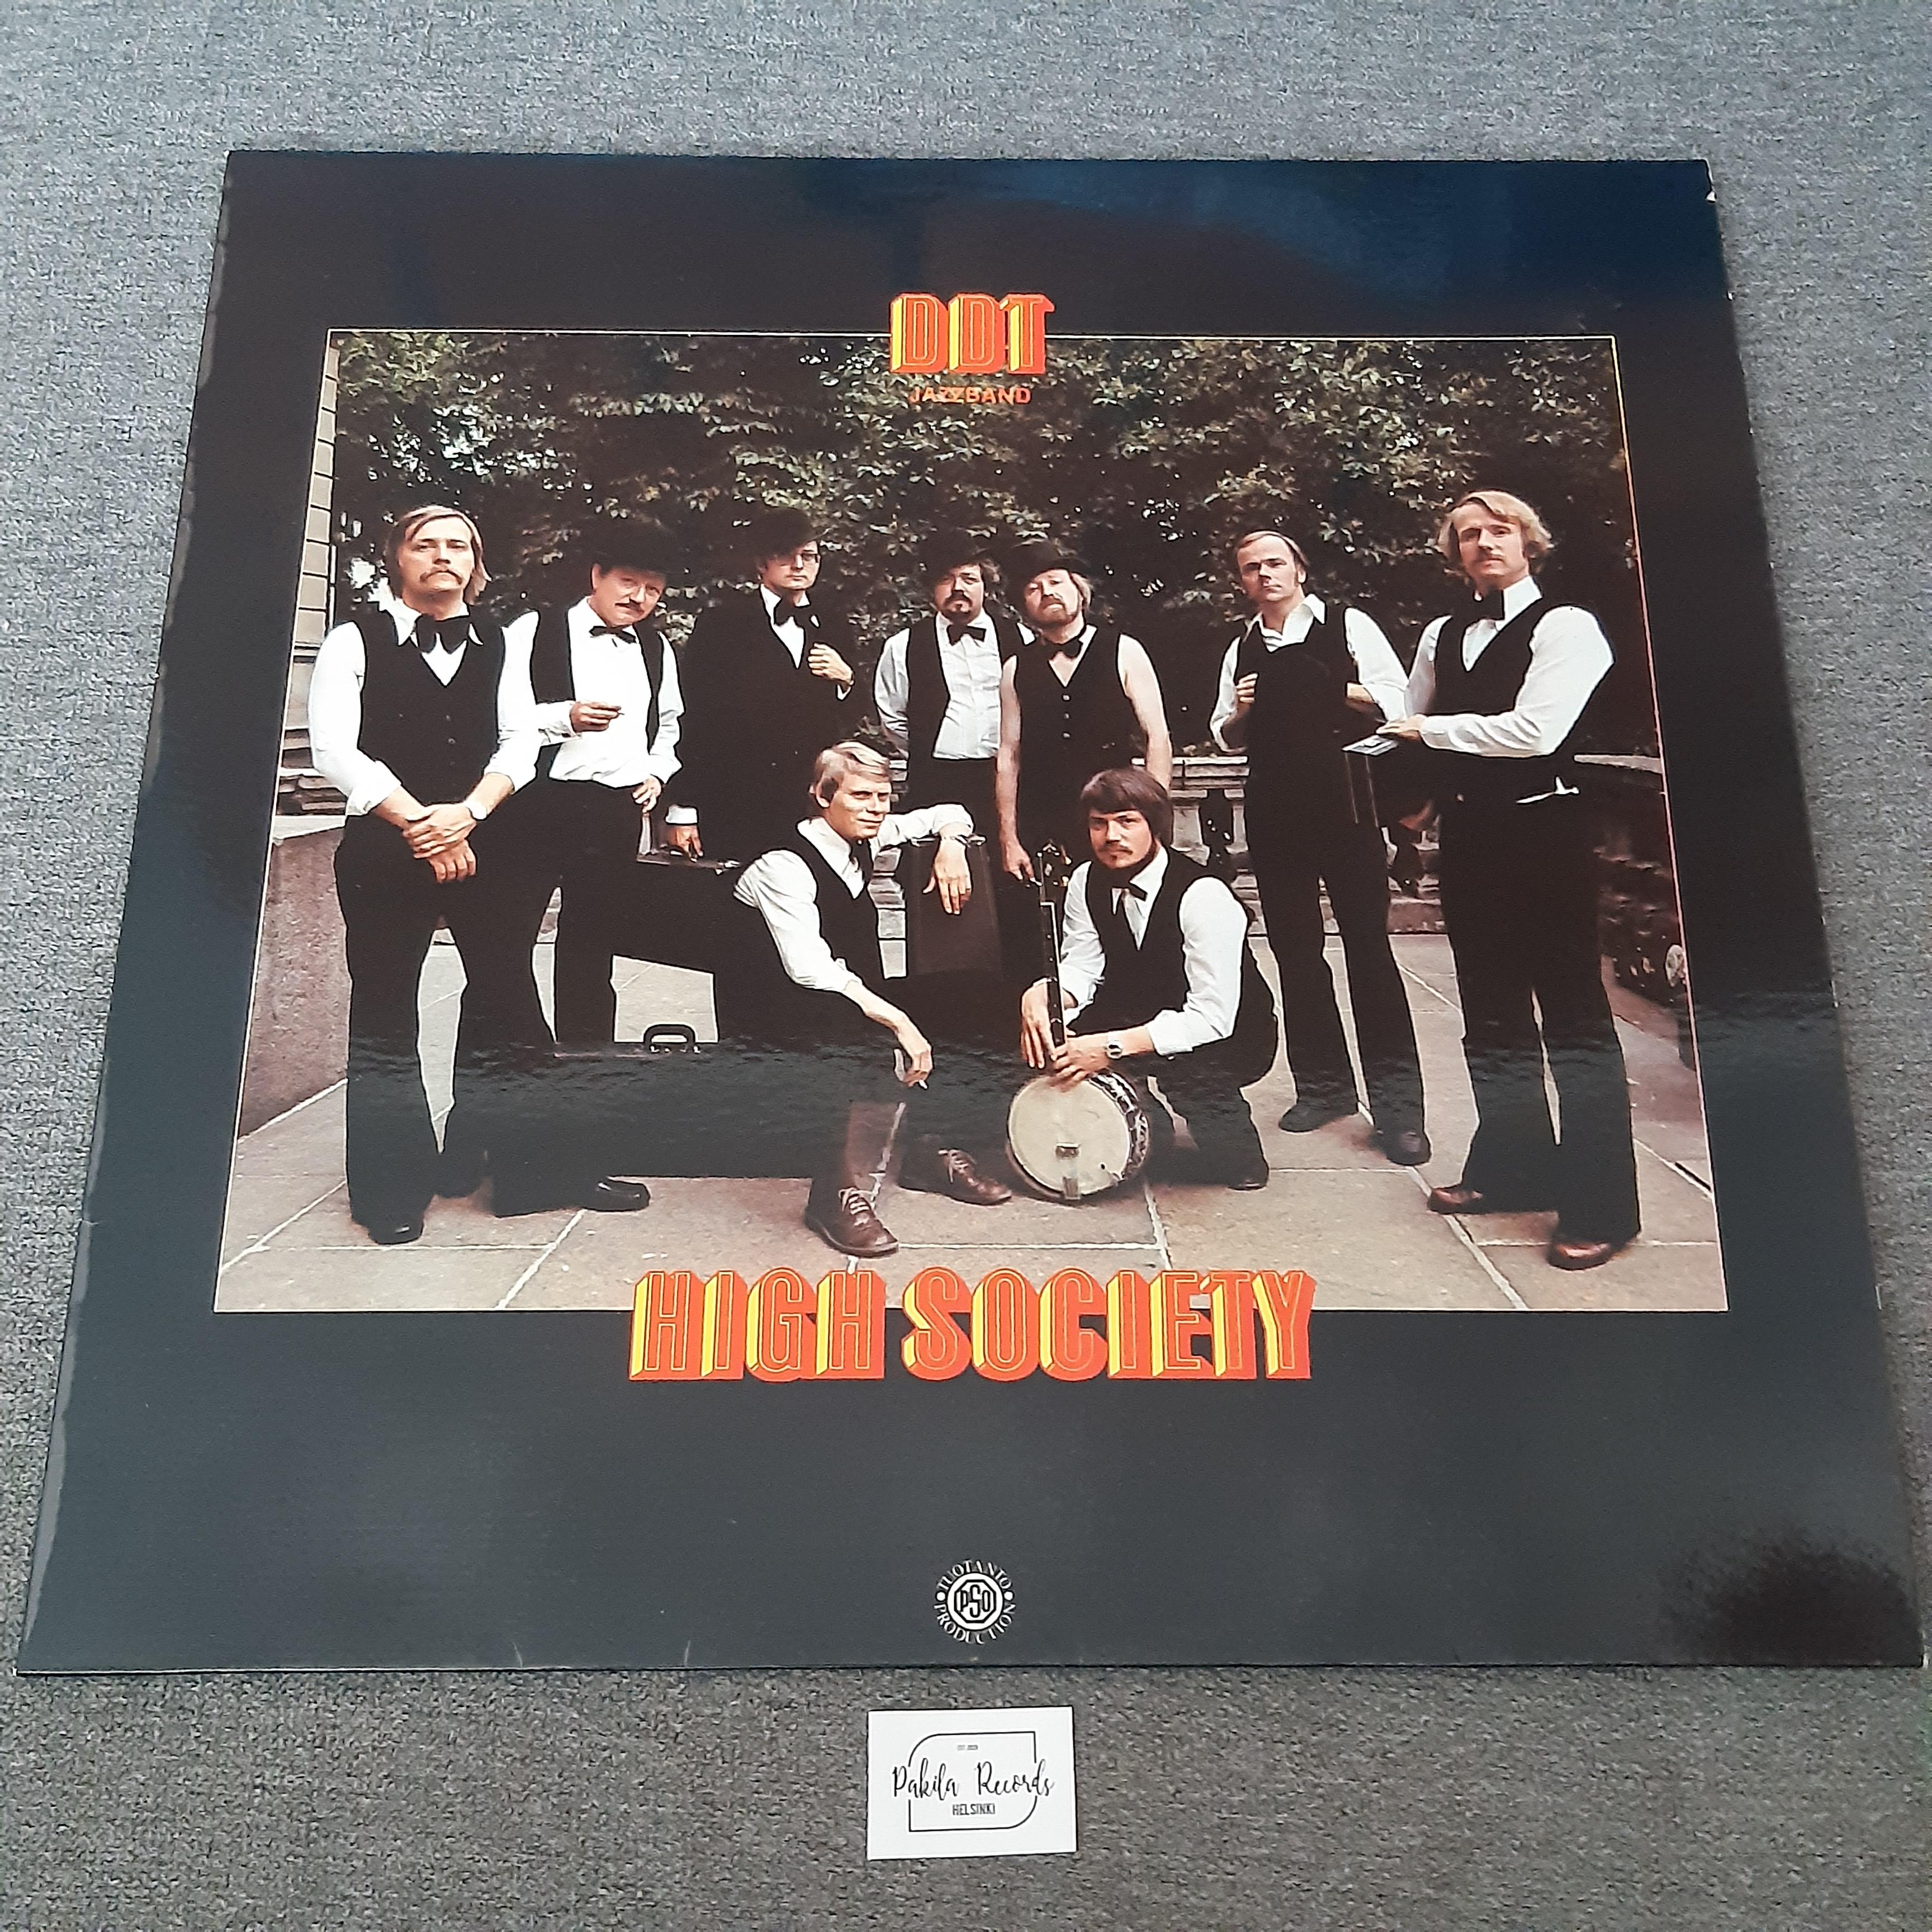 DDT Jazzband - High Society - LP (käytetty)